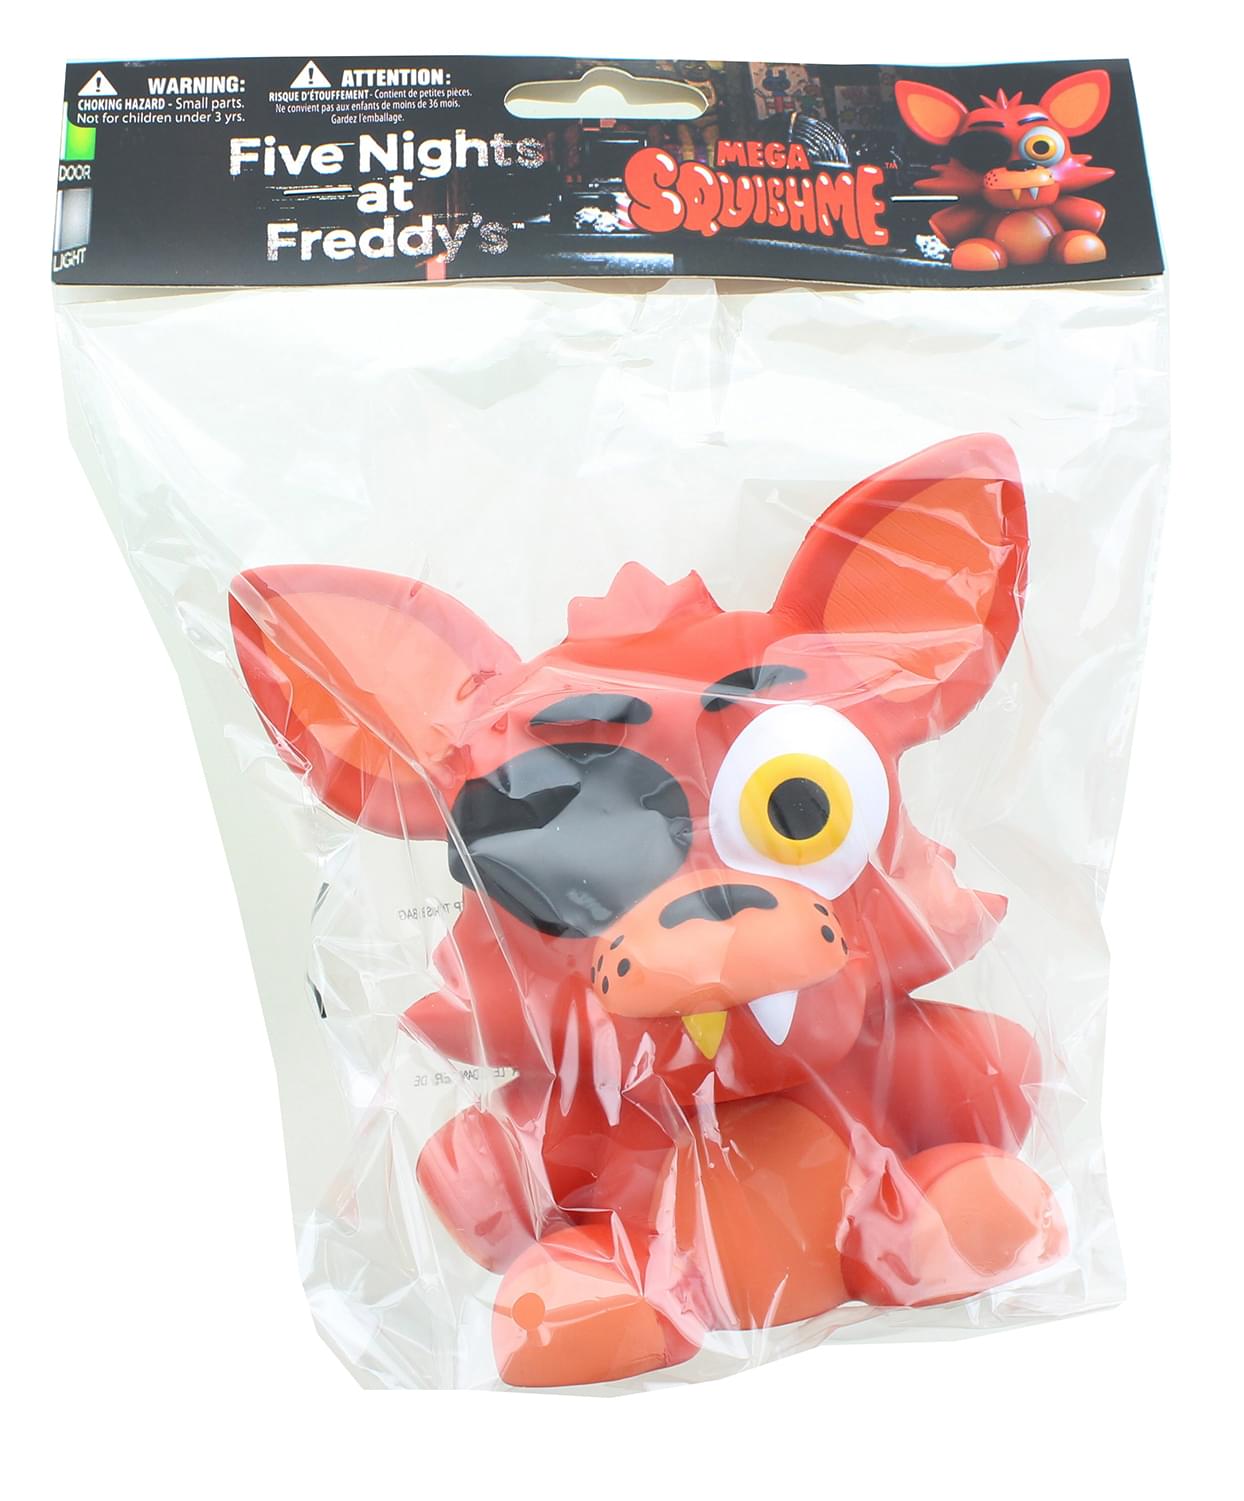 Five Nights at Freddy's 6 Inch Mega SquishMe Figure | Foxy